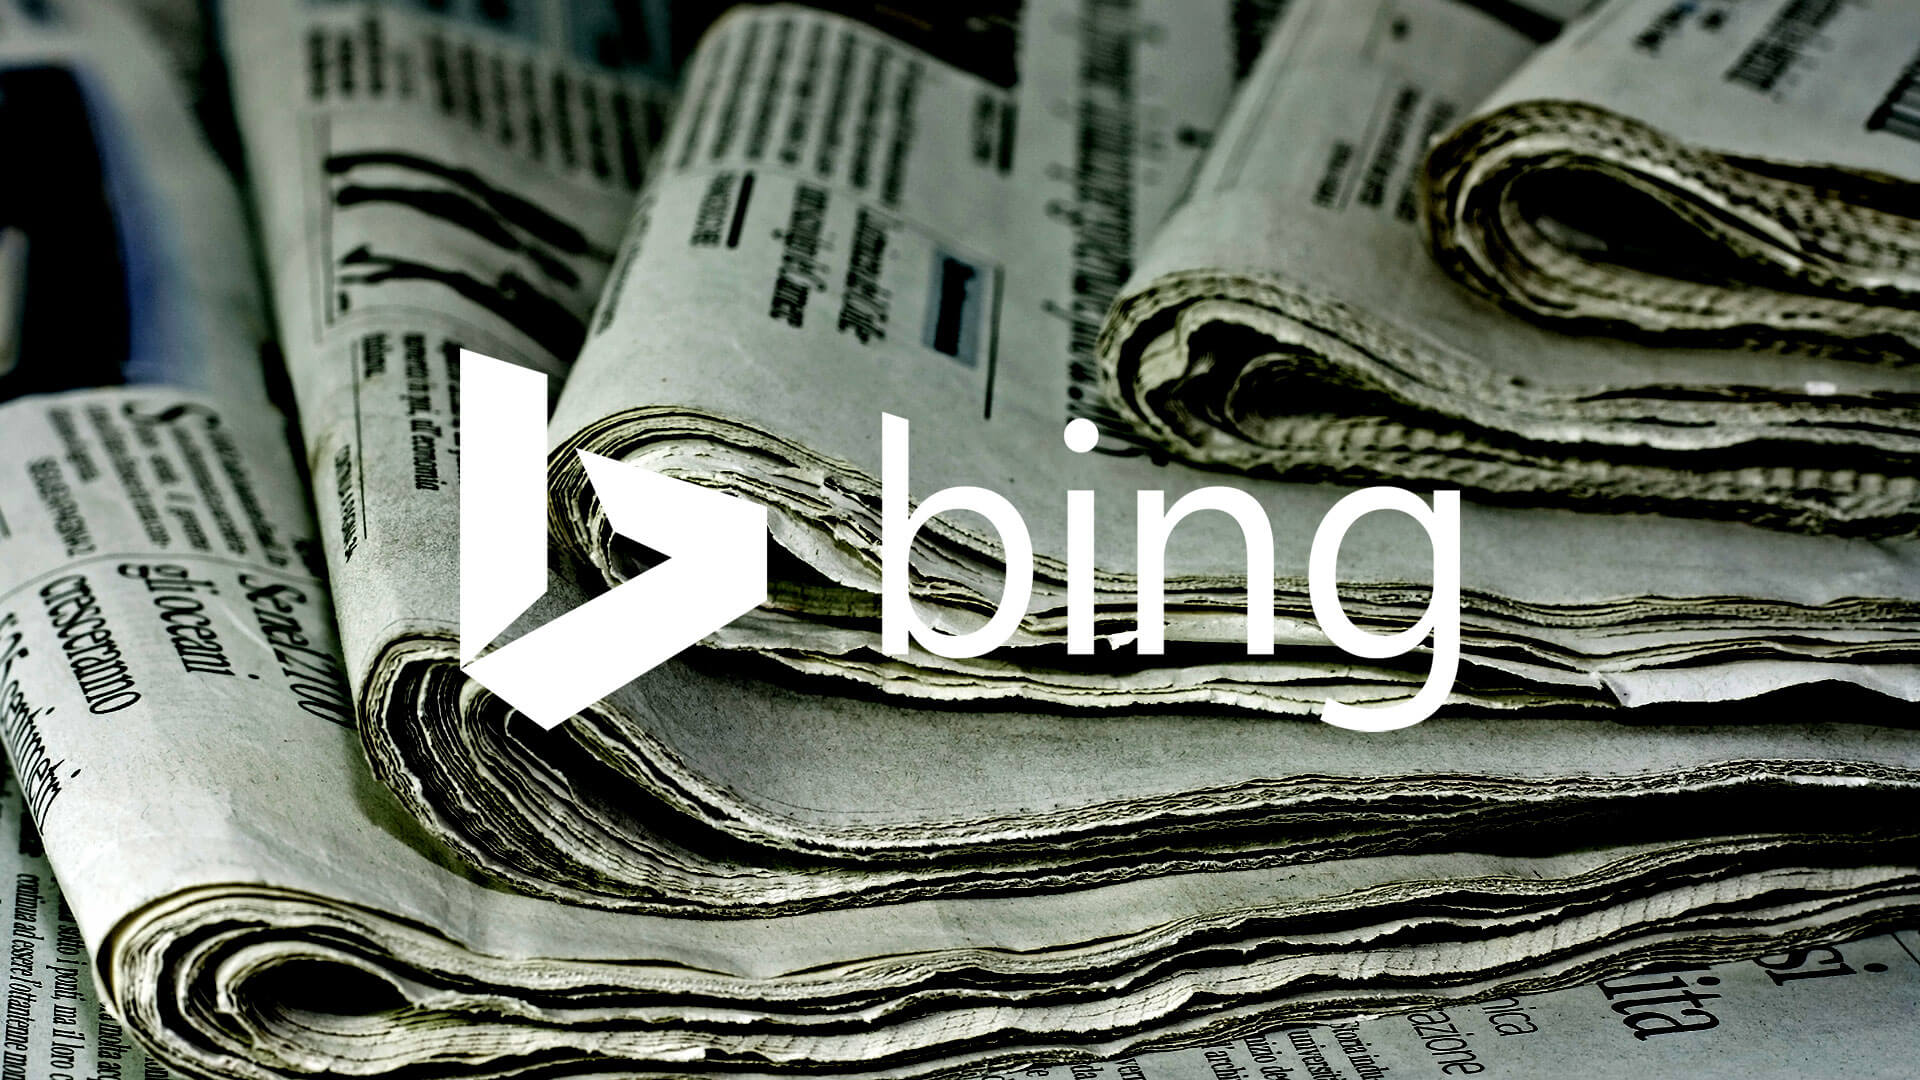 Bing News Adds 1920 x 1080